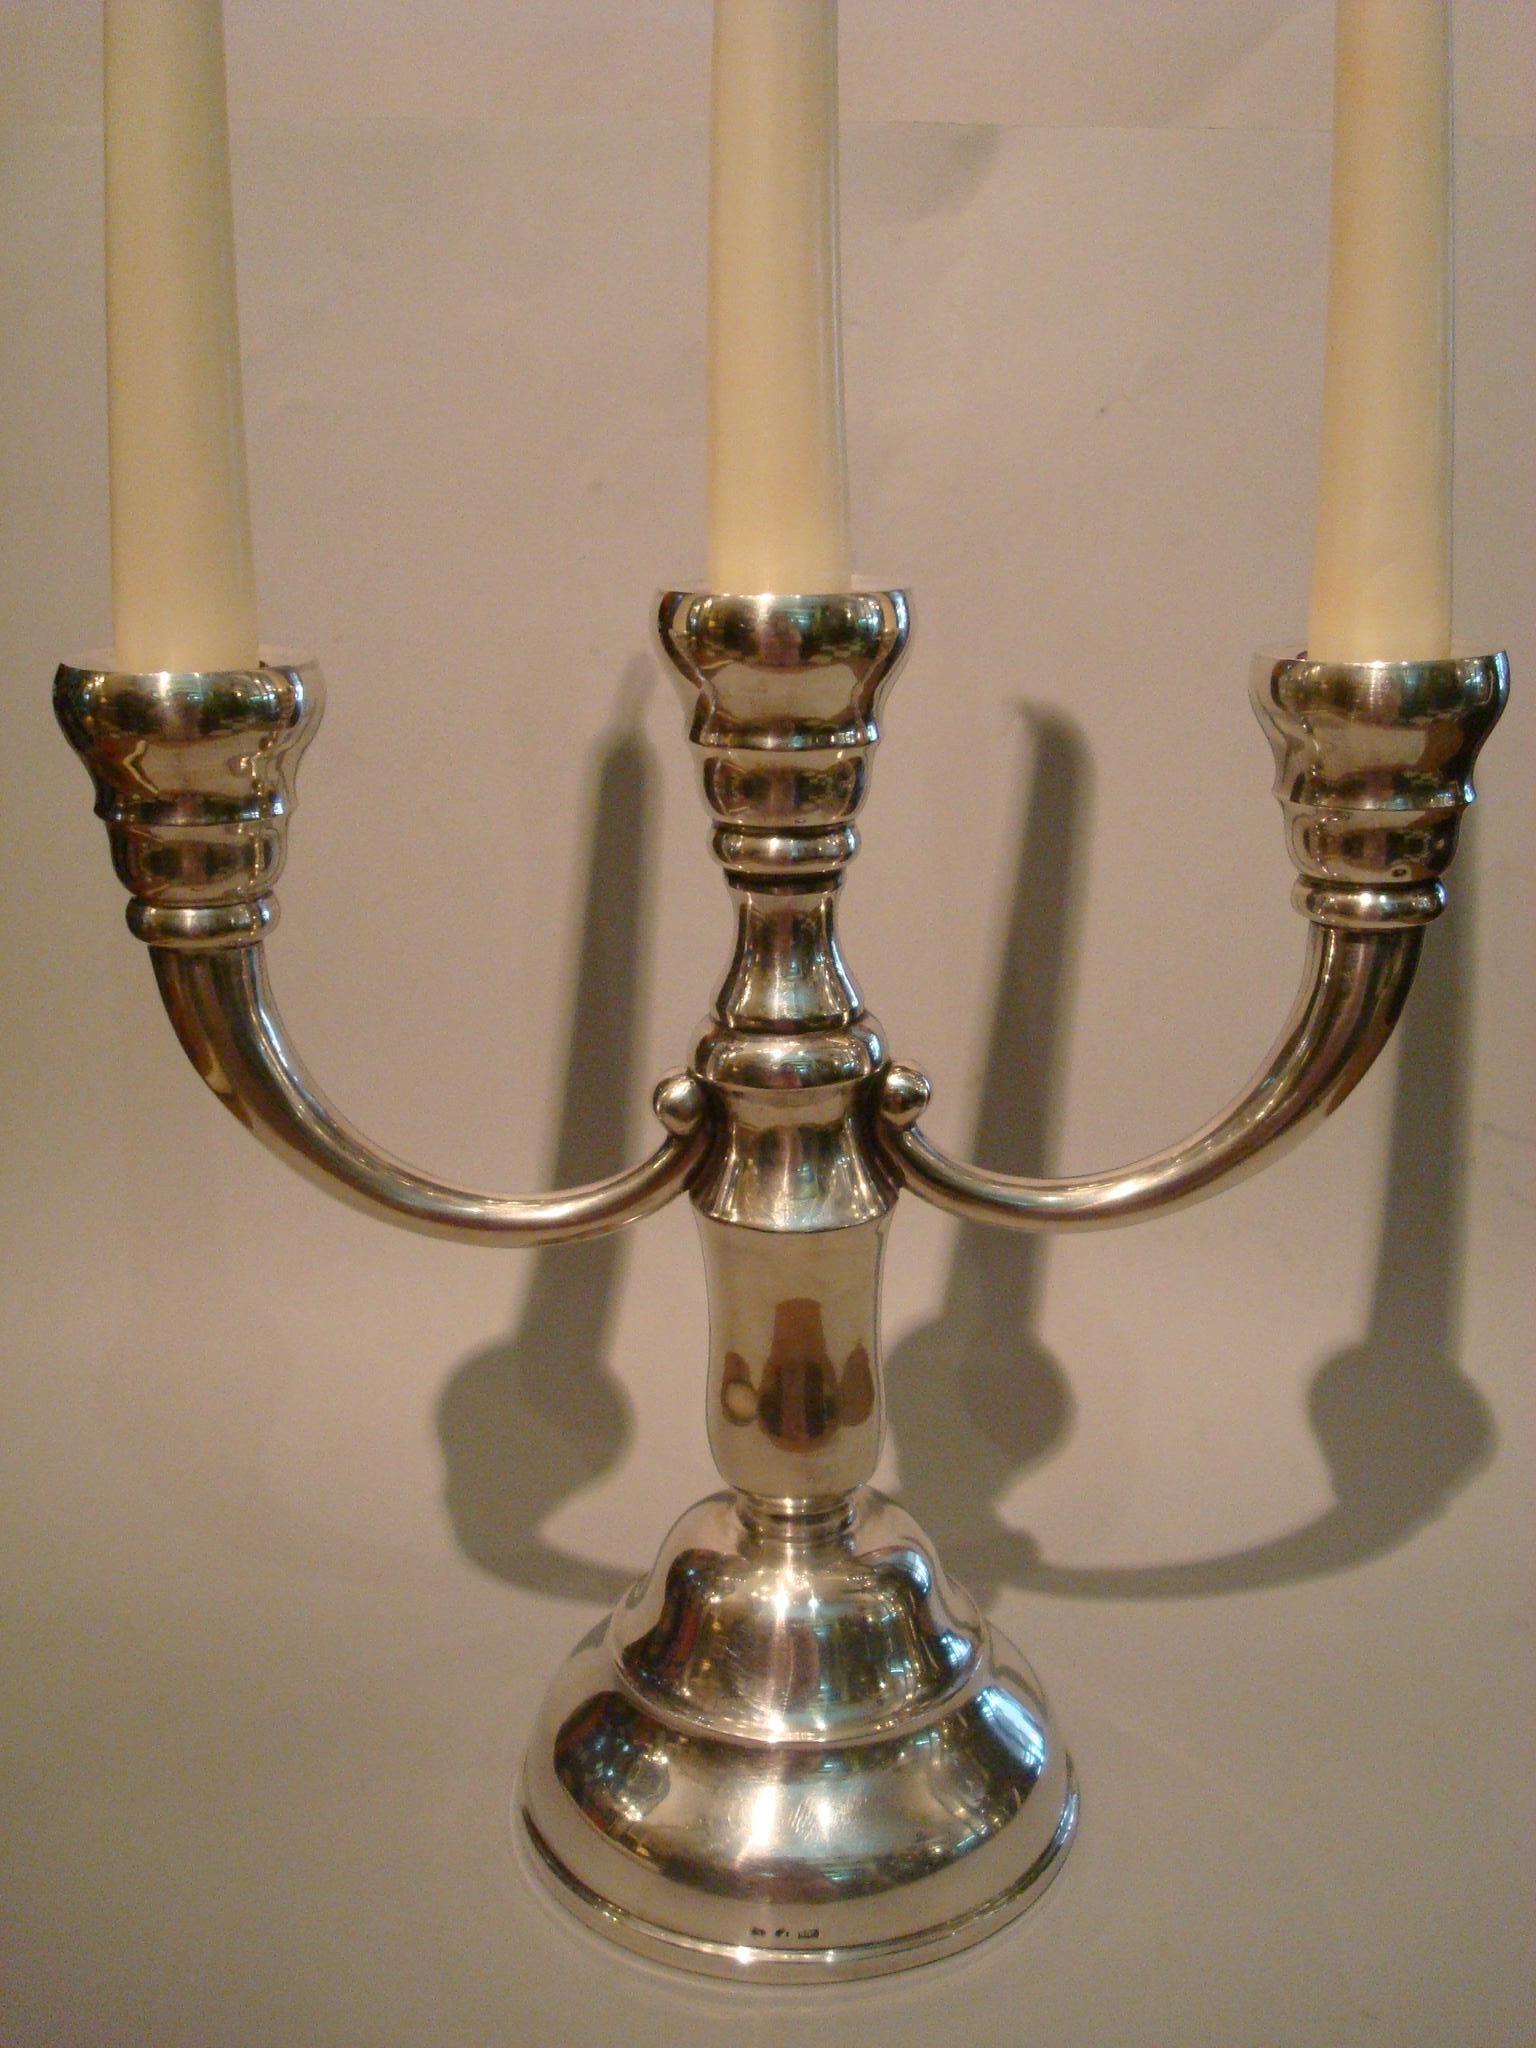 Pair of Art Deco candleholder / candlesticks made of Italian silver, circa 1920s.